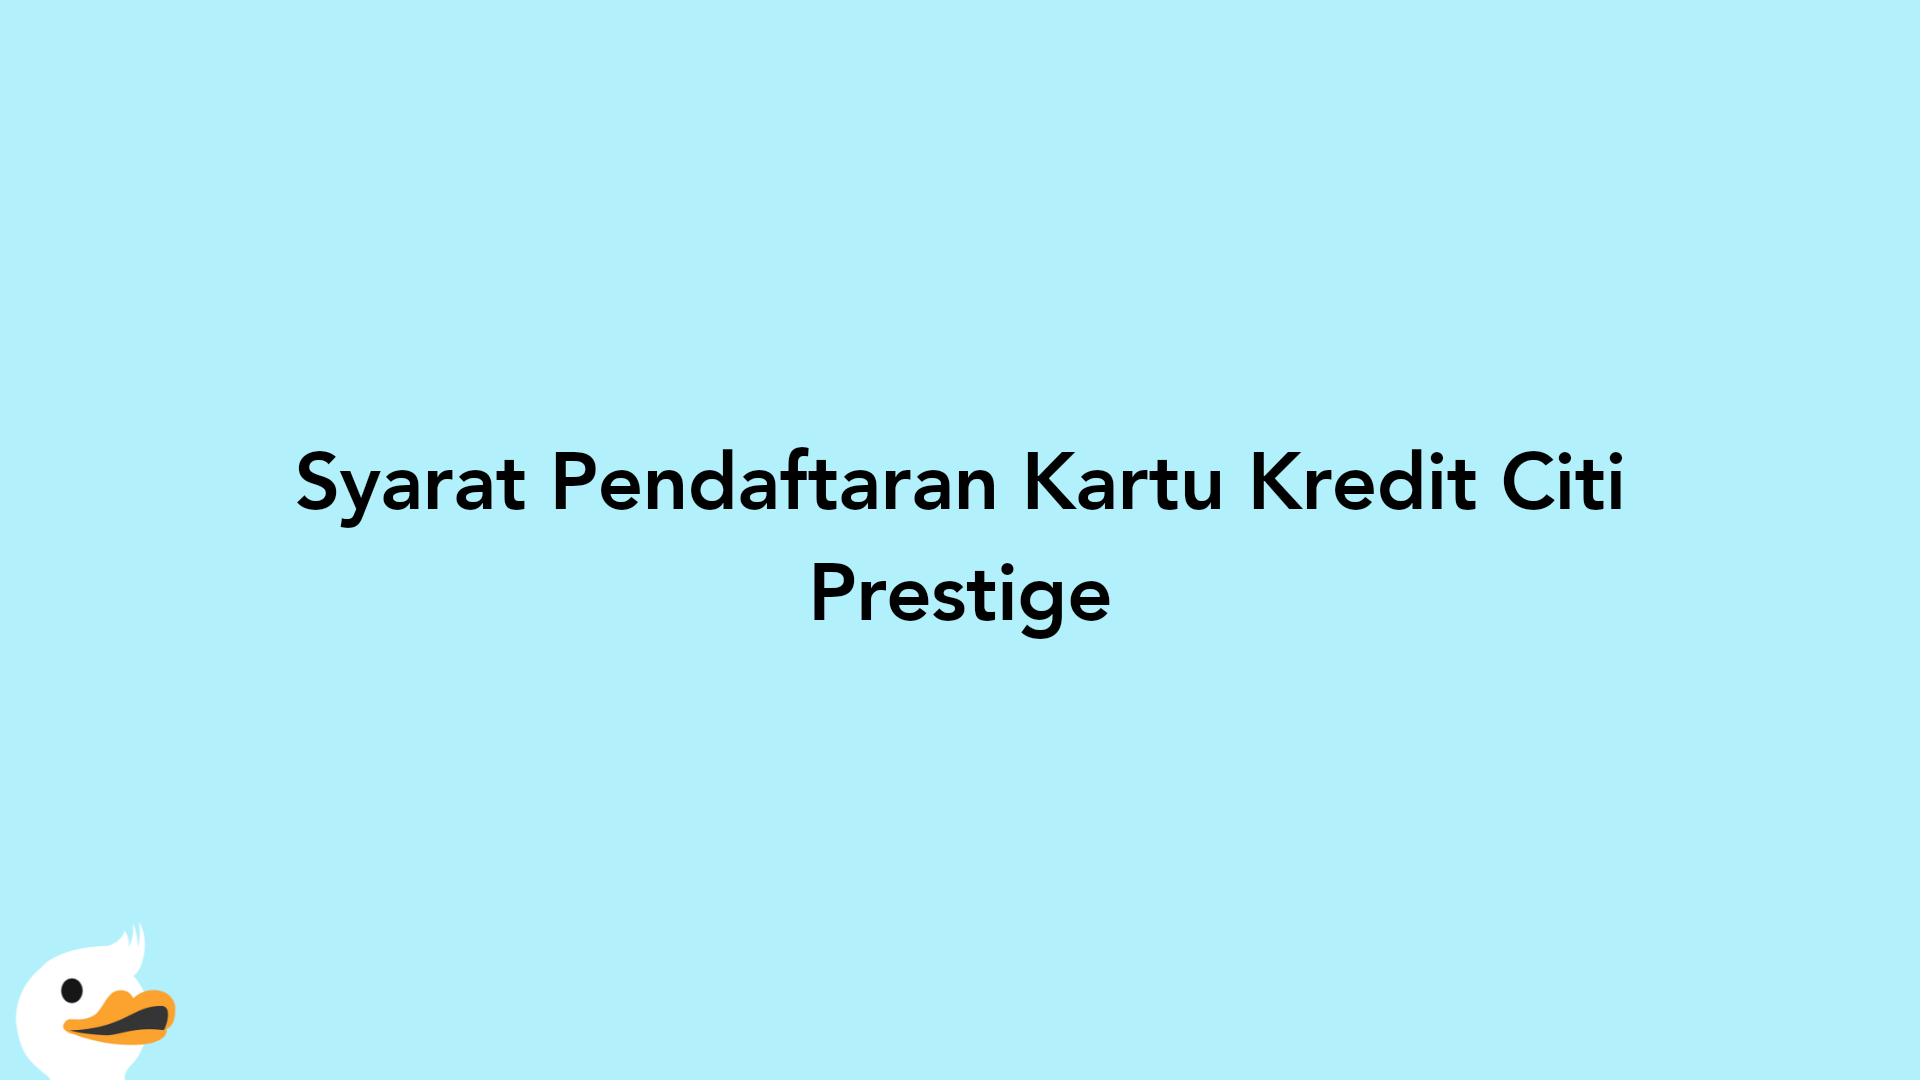 Syarat Pendaftaran Kartu Kredit Citi Prestige